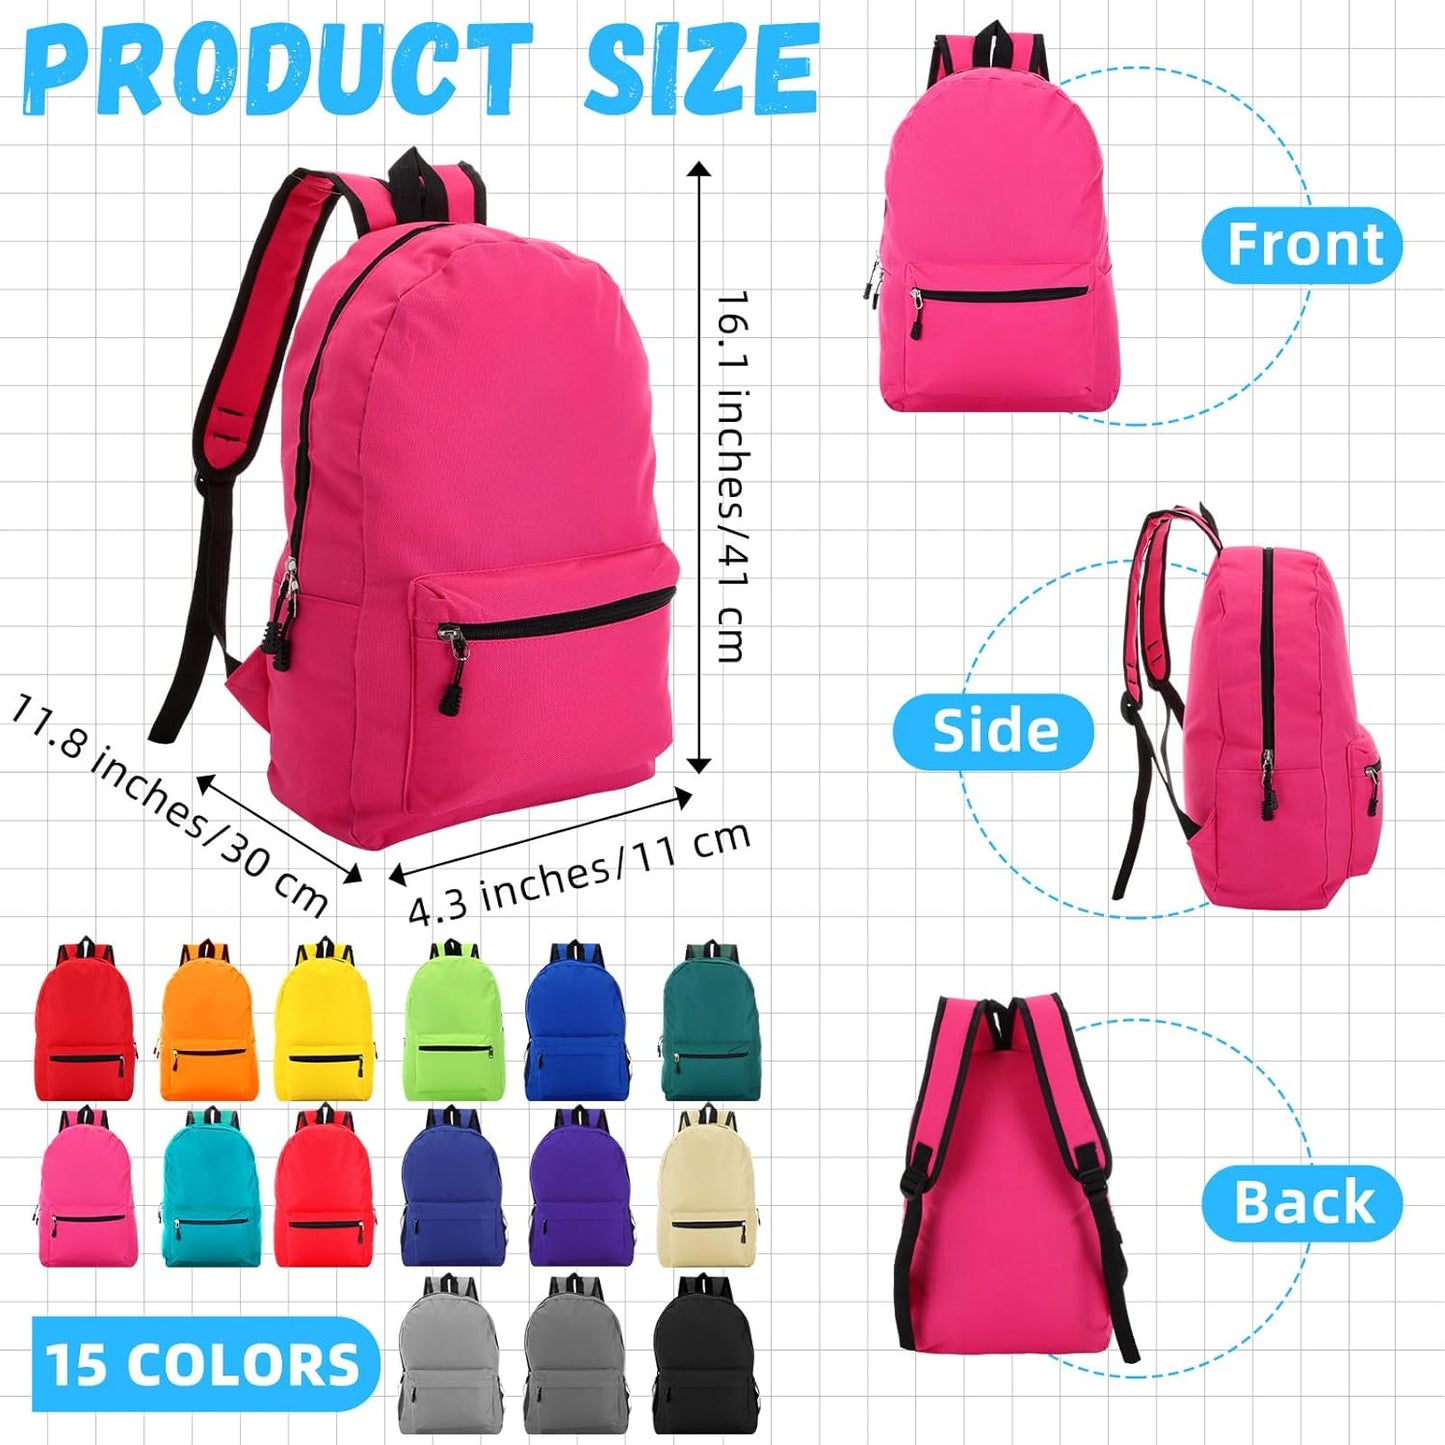 30 Pcs Backpack in Bulk 16" School Bookbags for Kids Lightweight Student Backpack Basic Casual Backpacks School Supply Kits for Girls Boys, 15 Colors